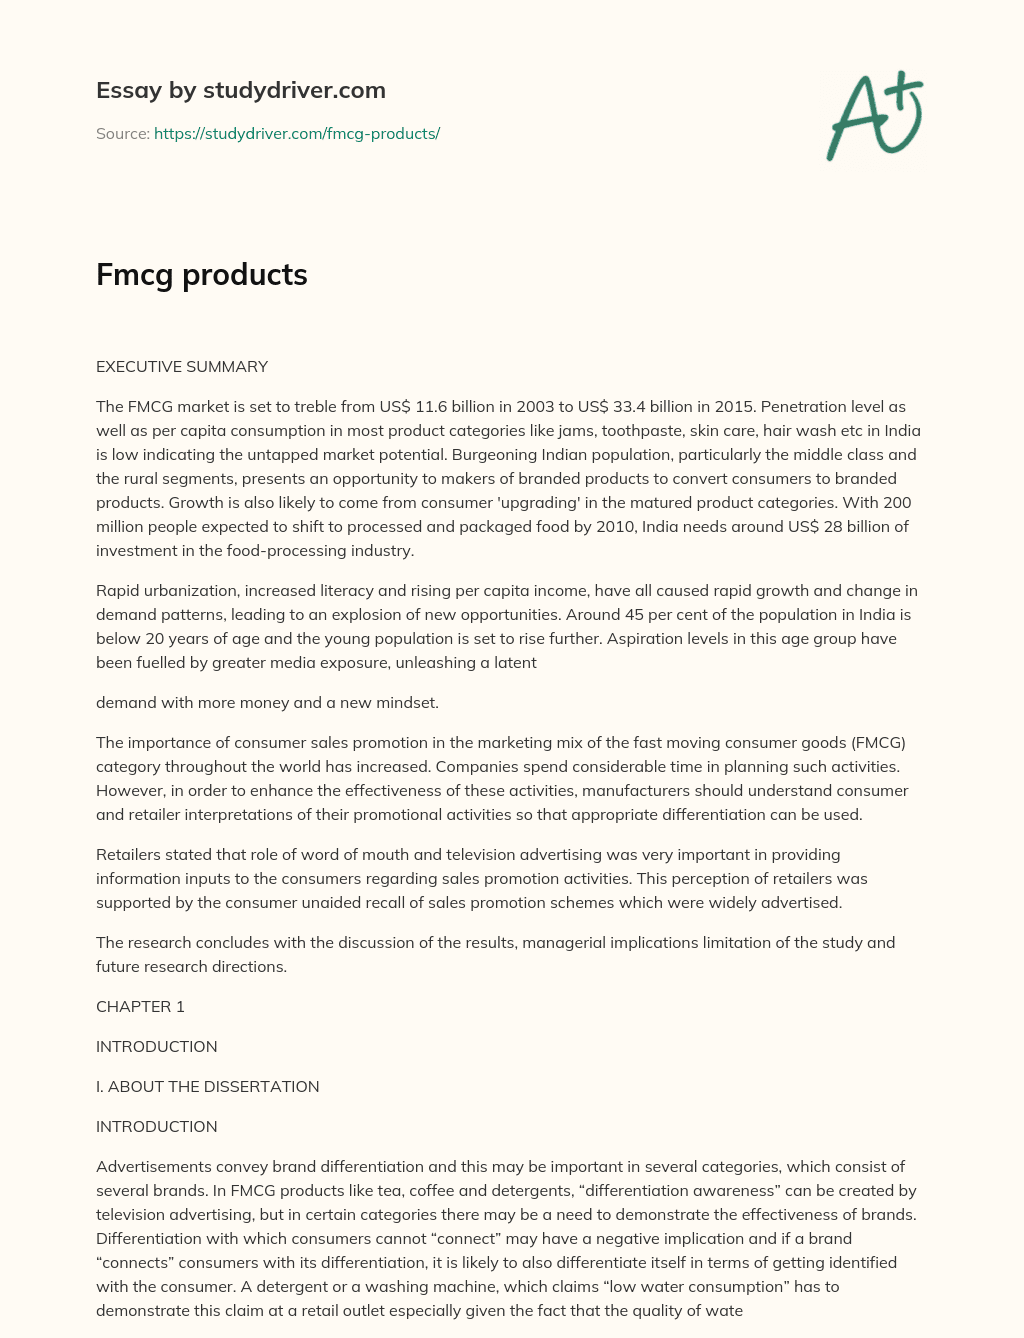 Fmcg Products essay